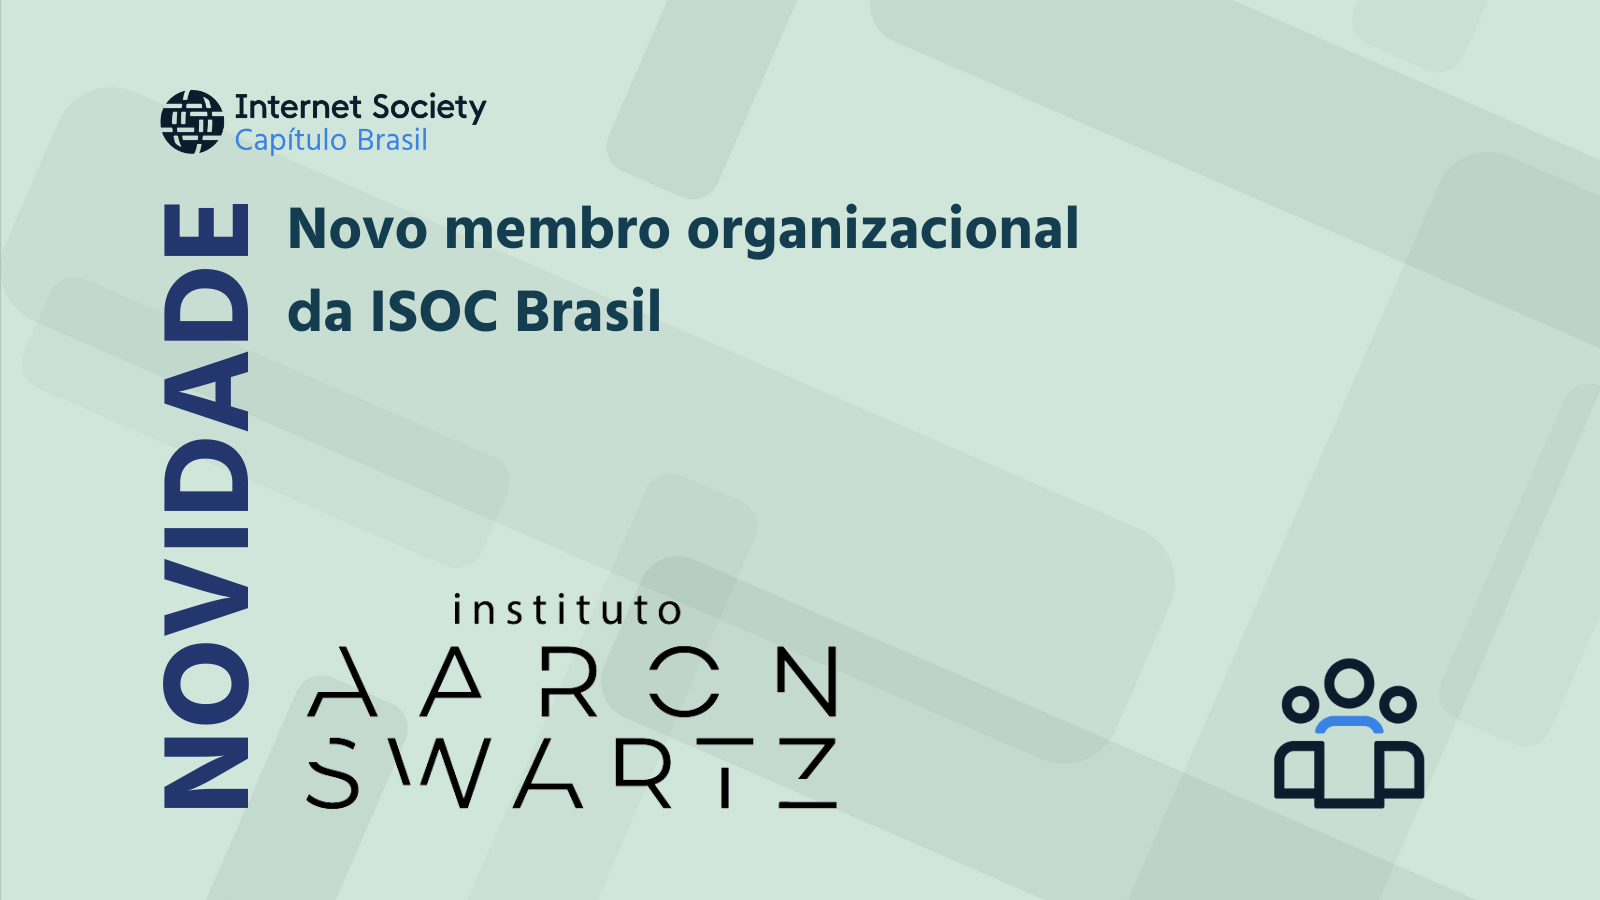 Novo Membro organizacional | Instituto Aaron Swartz